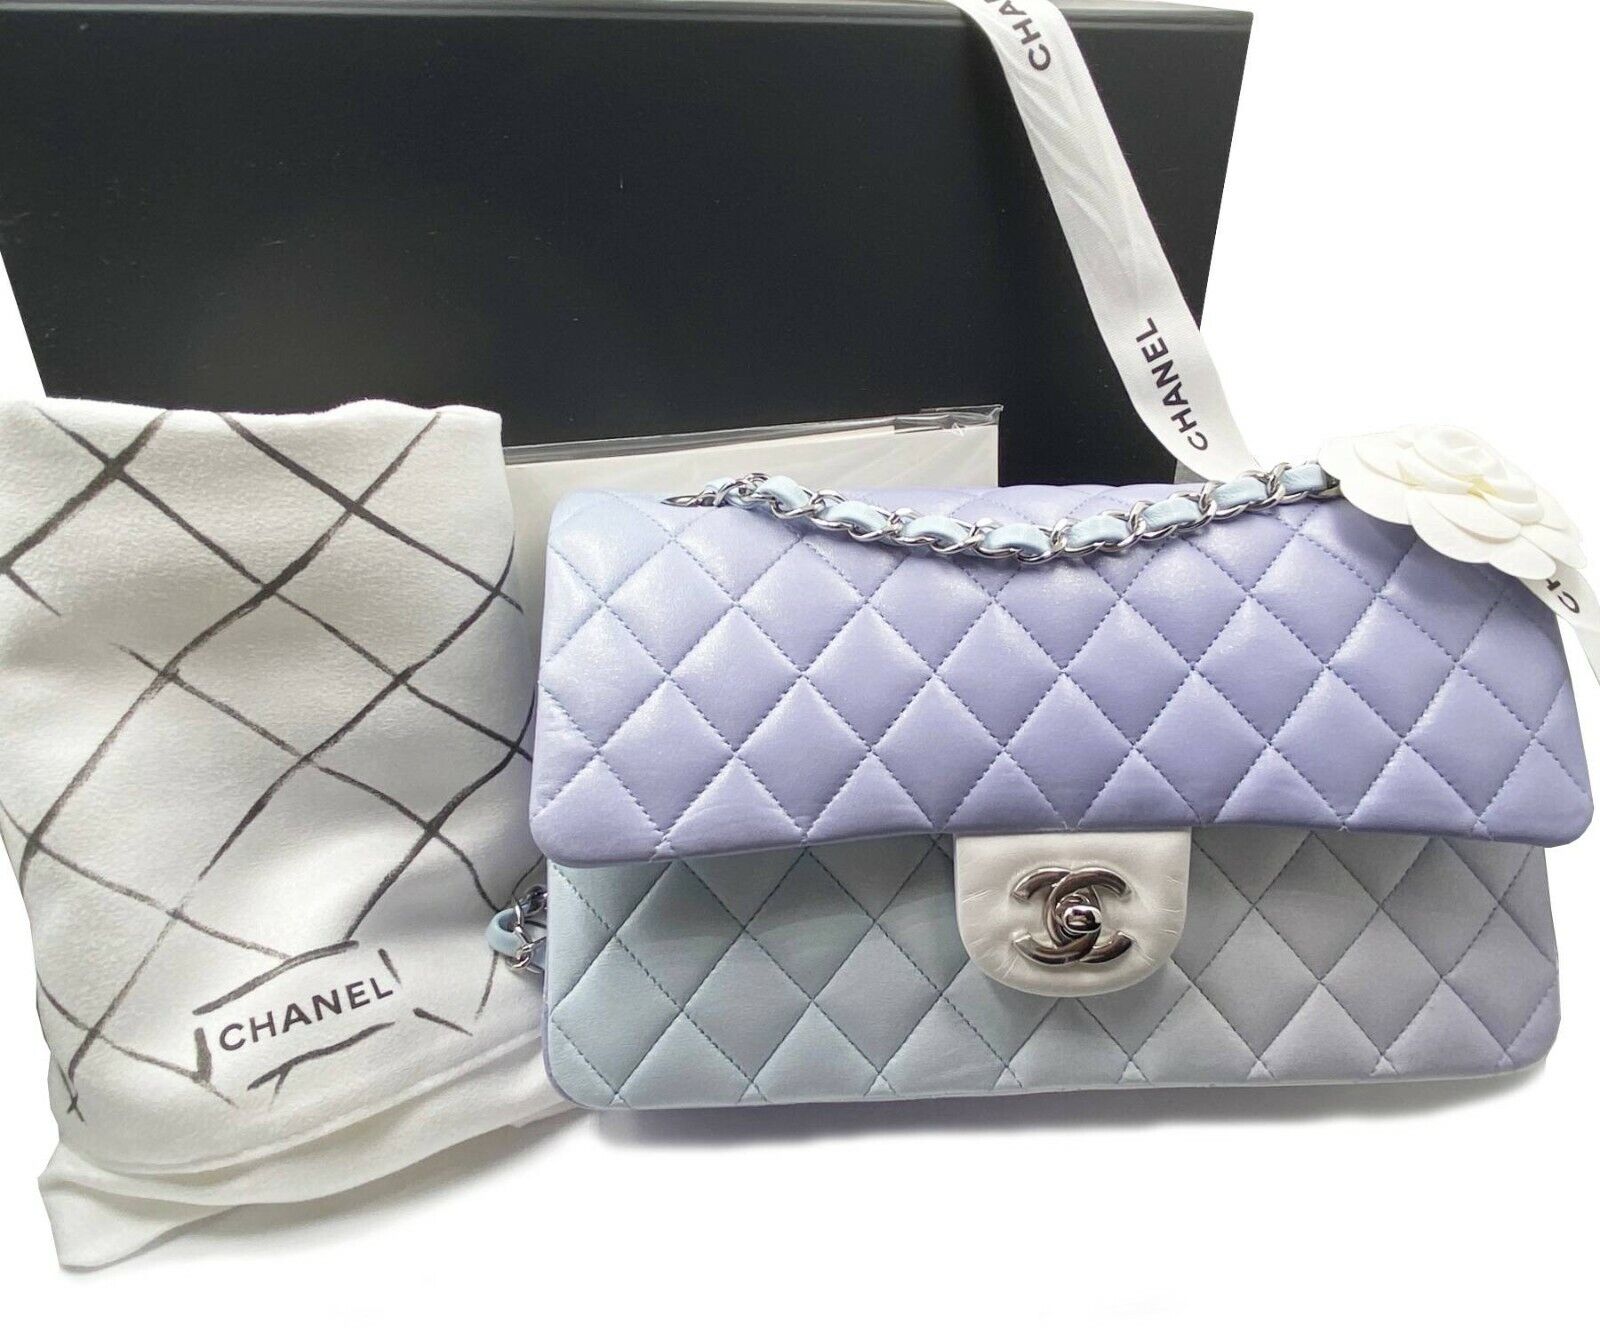 Chanel Brand New Classic Rare 10 Medium Lavender Blue Ombre Degrade Bag